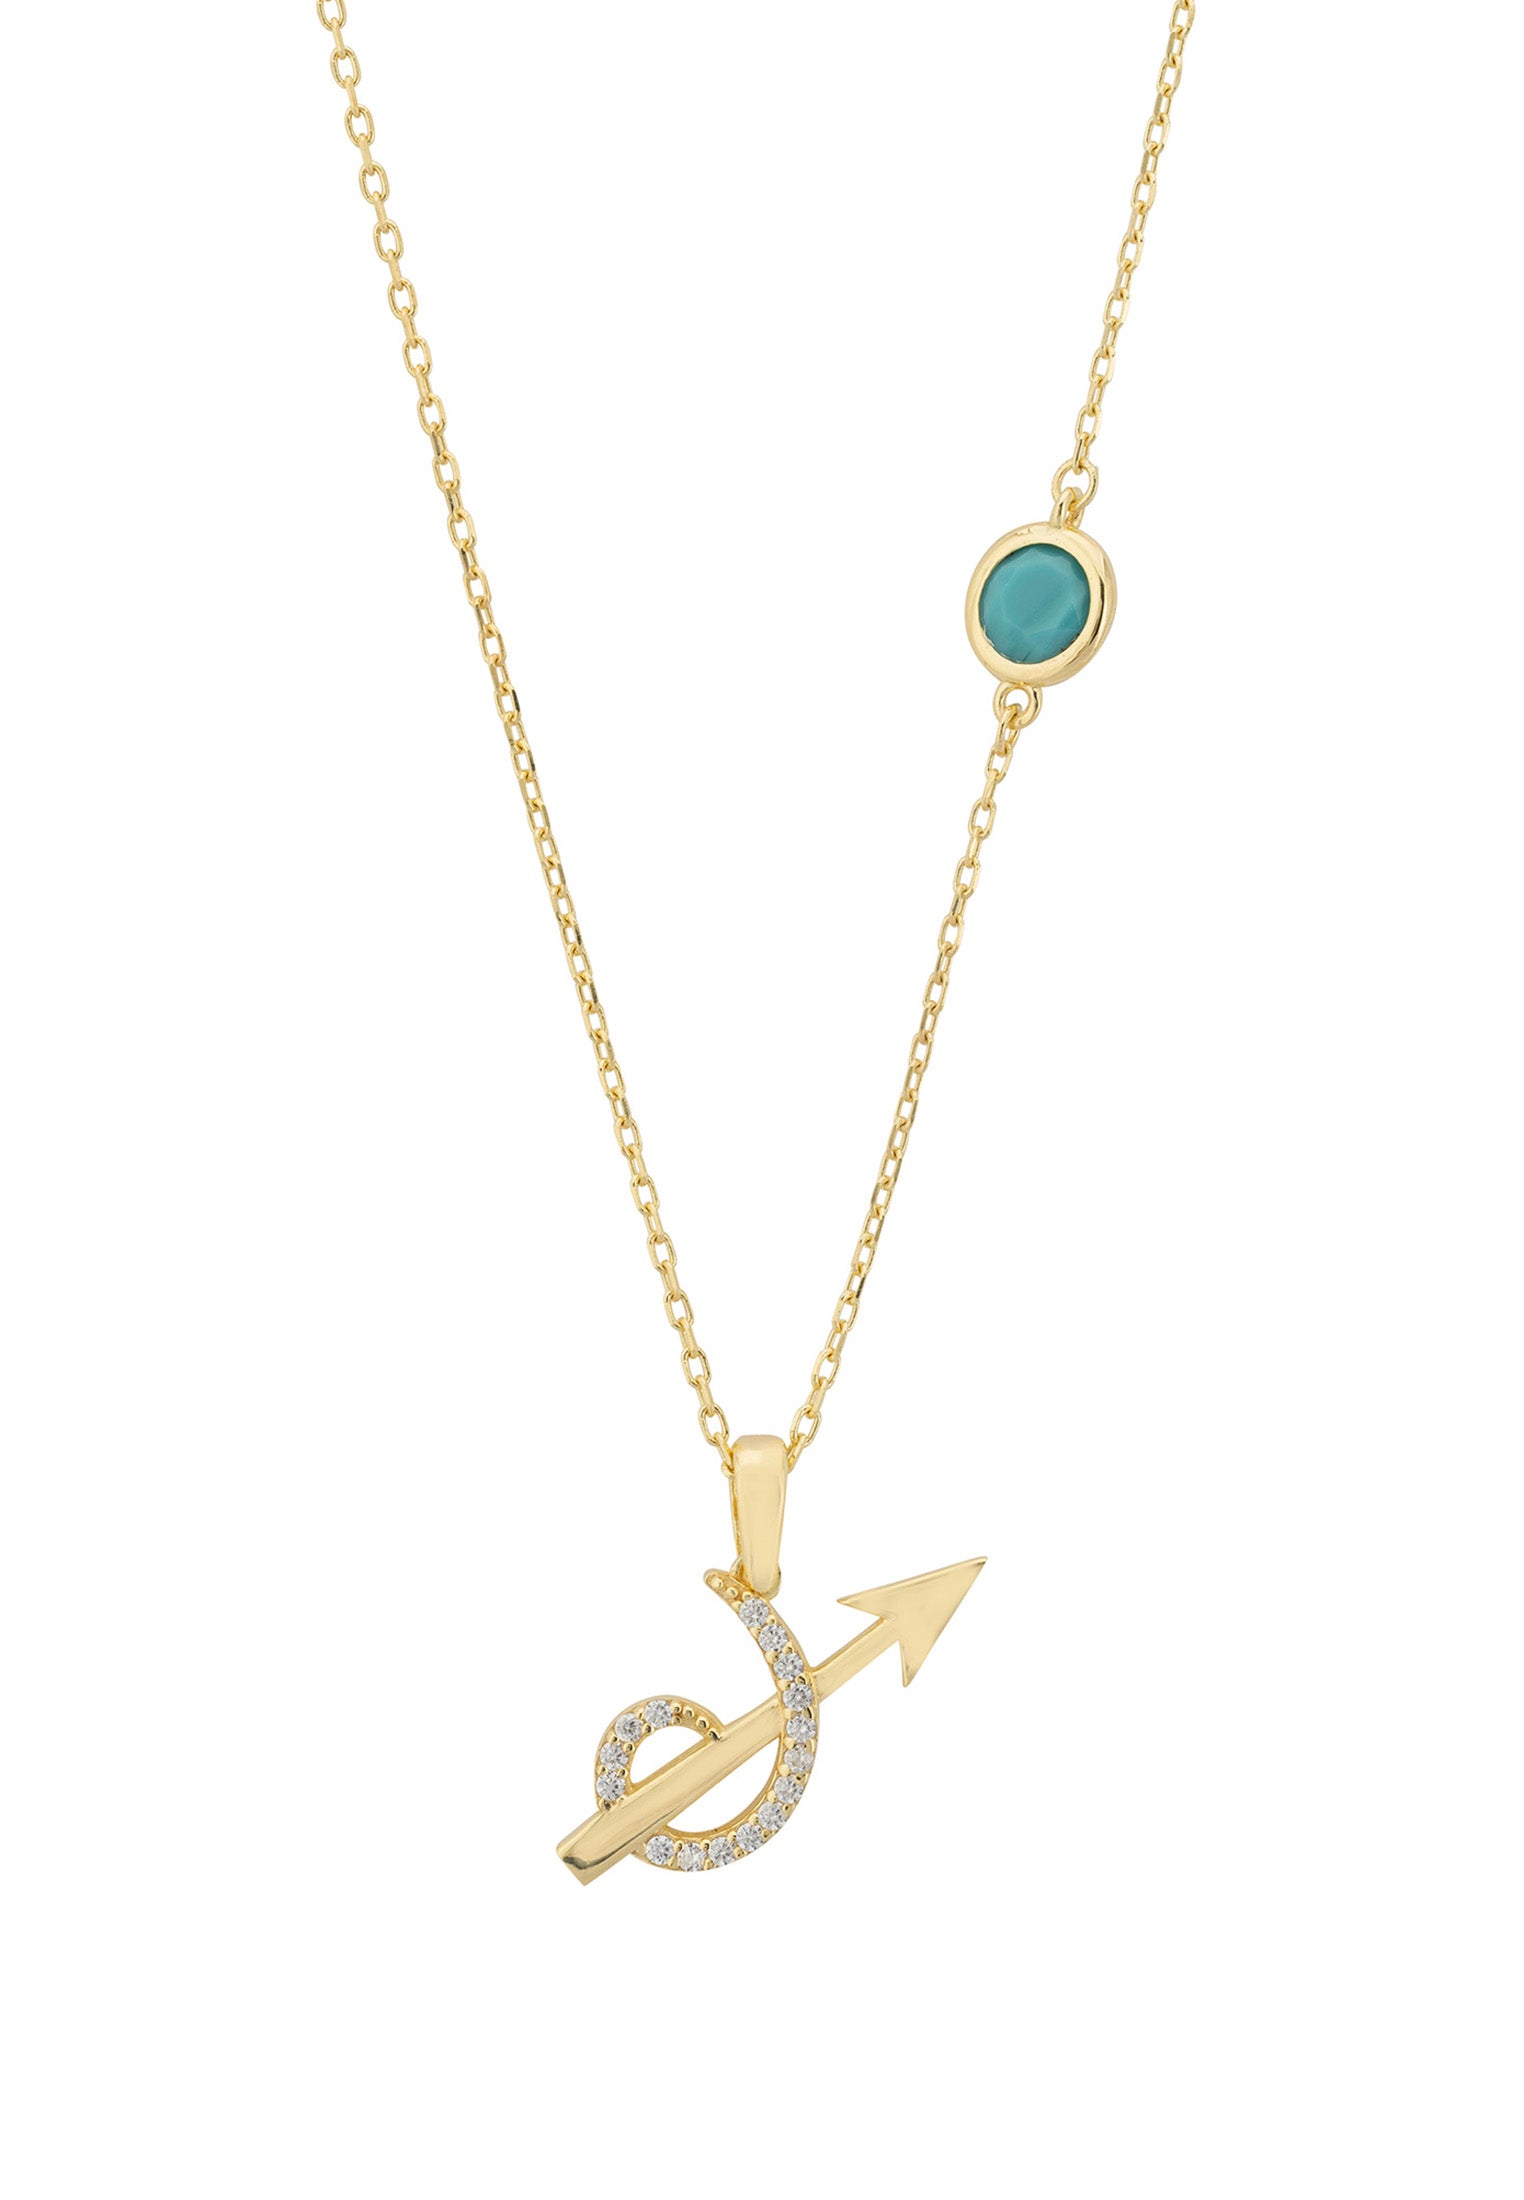 Zodiac Birthstone Sagittarius Necklace Turquoise Gold